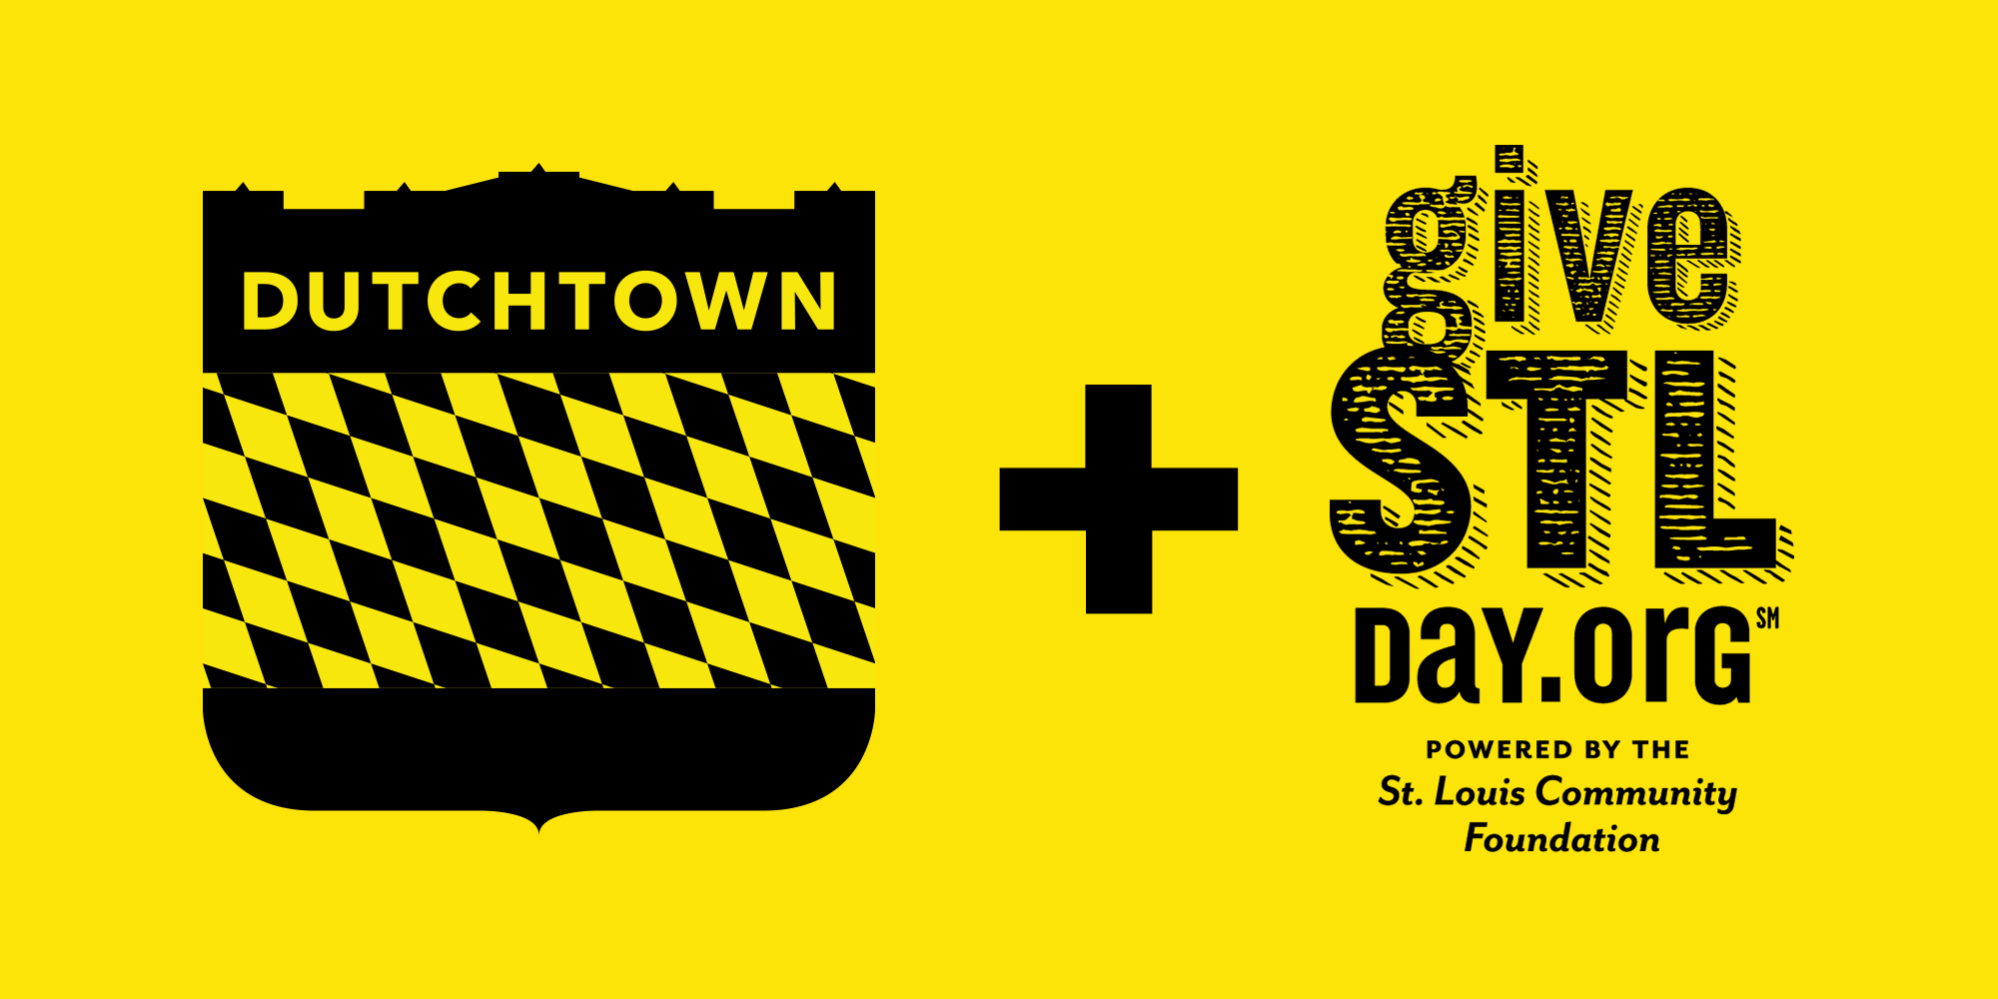 Give STL နေ့၌ Dutchtown ကိုကူညီပါ